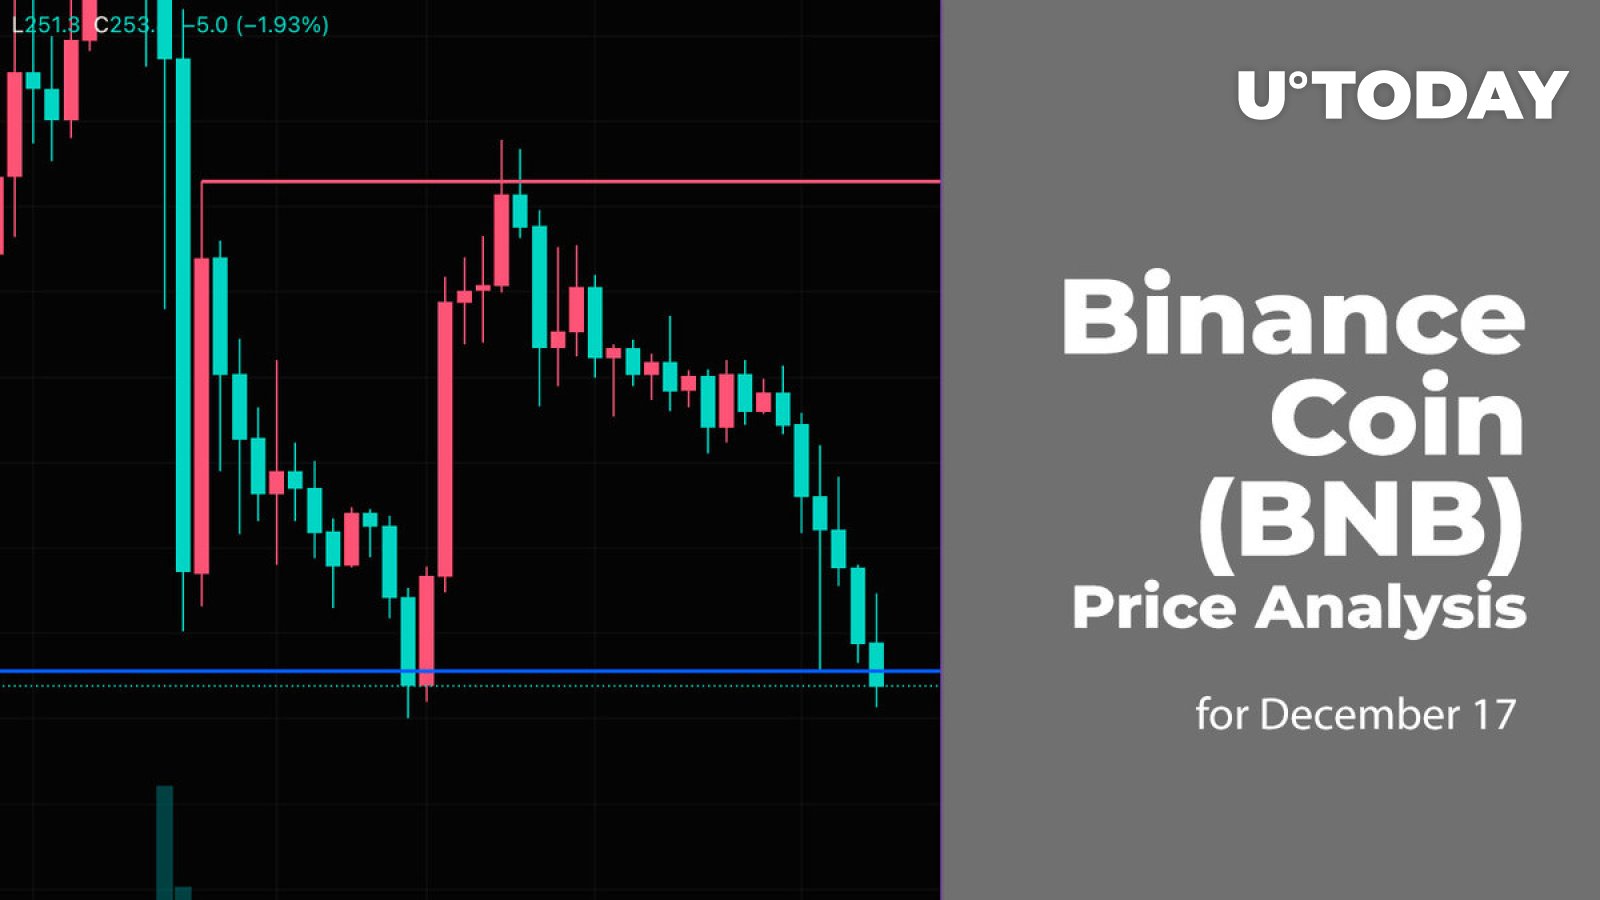 Binance Coin (BNB) Price Analysis for December 17